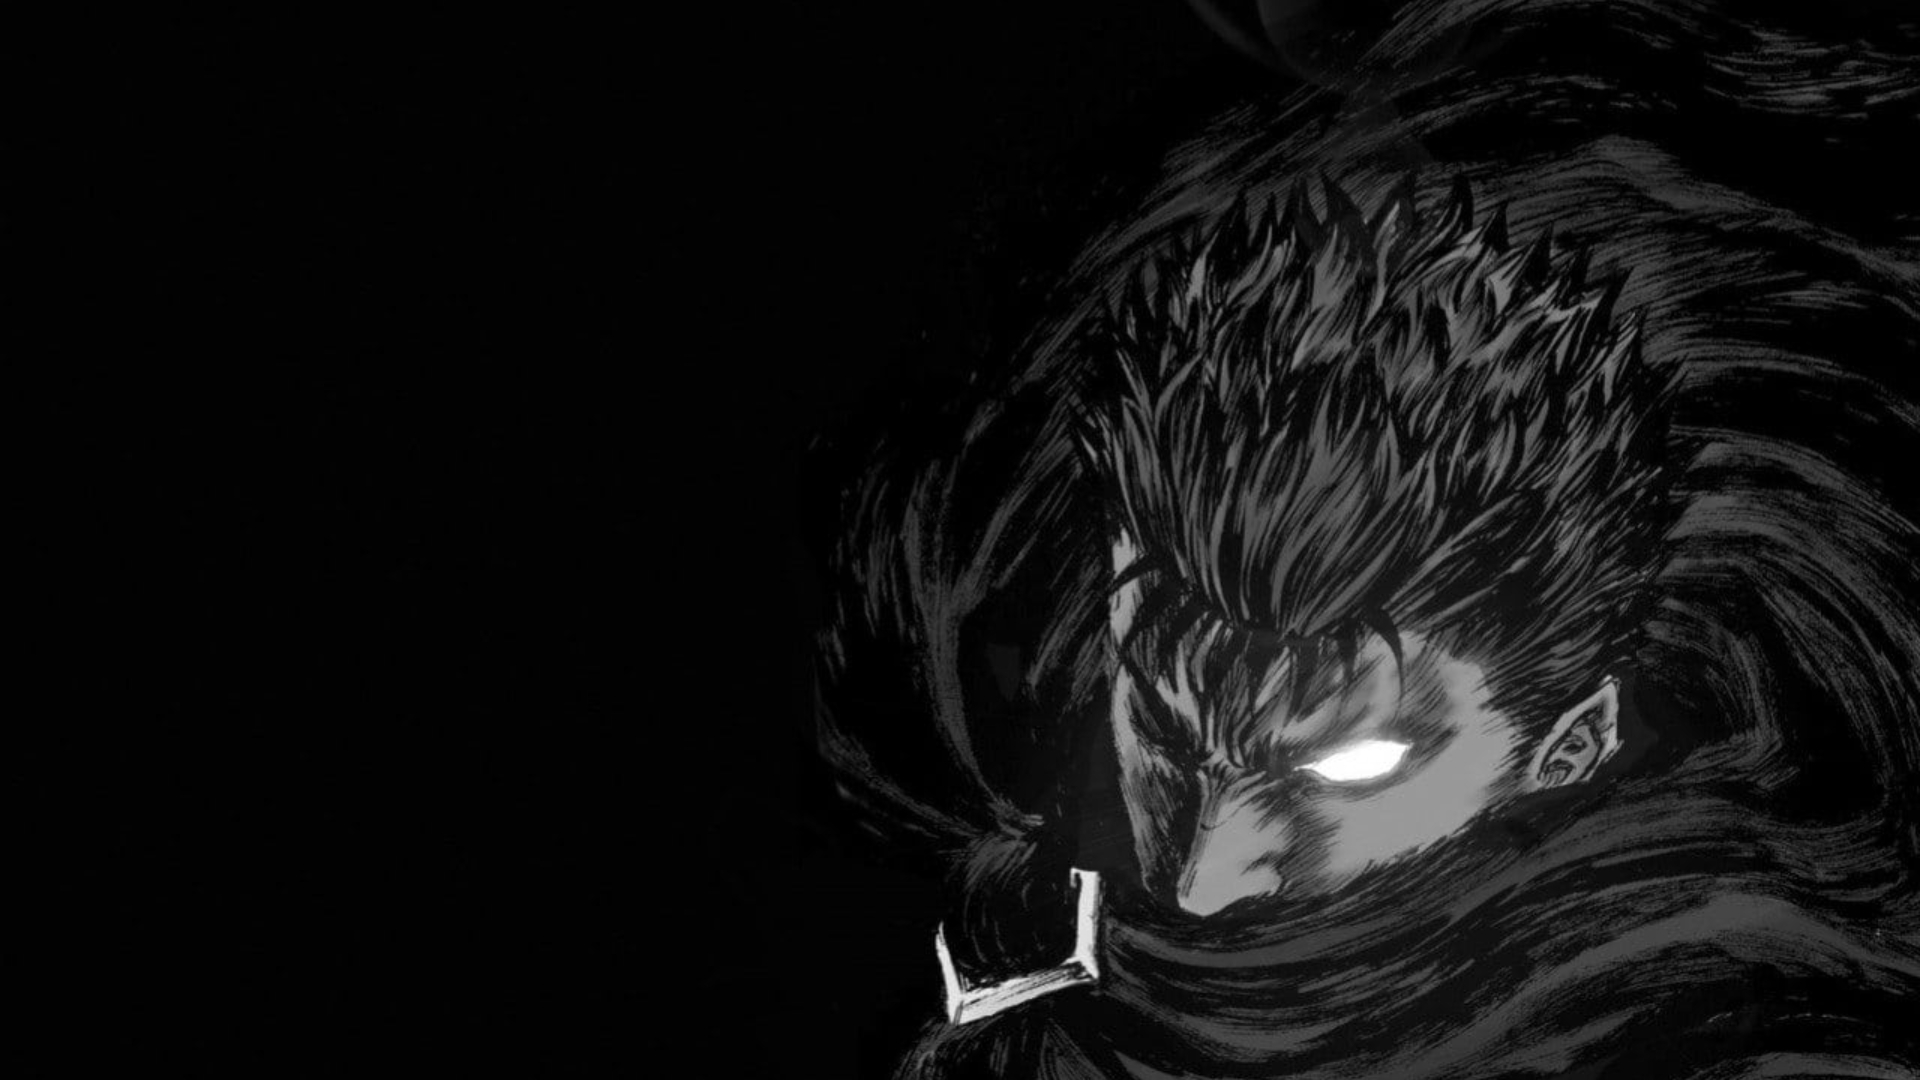 Anime 1920x1080 Berserk anime Guts Griffith anime men one eye closed short hair simple background black background minimalism scarf